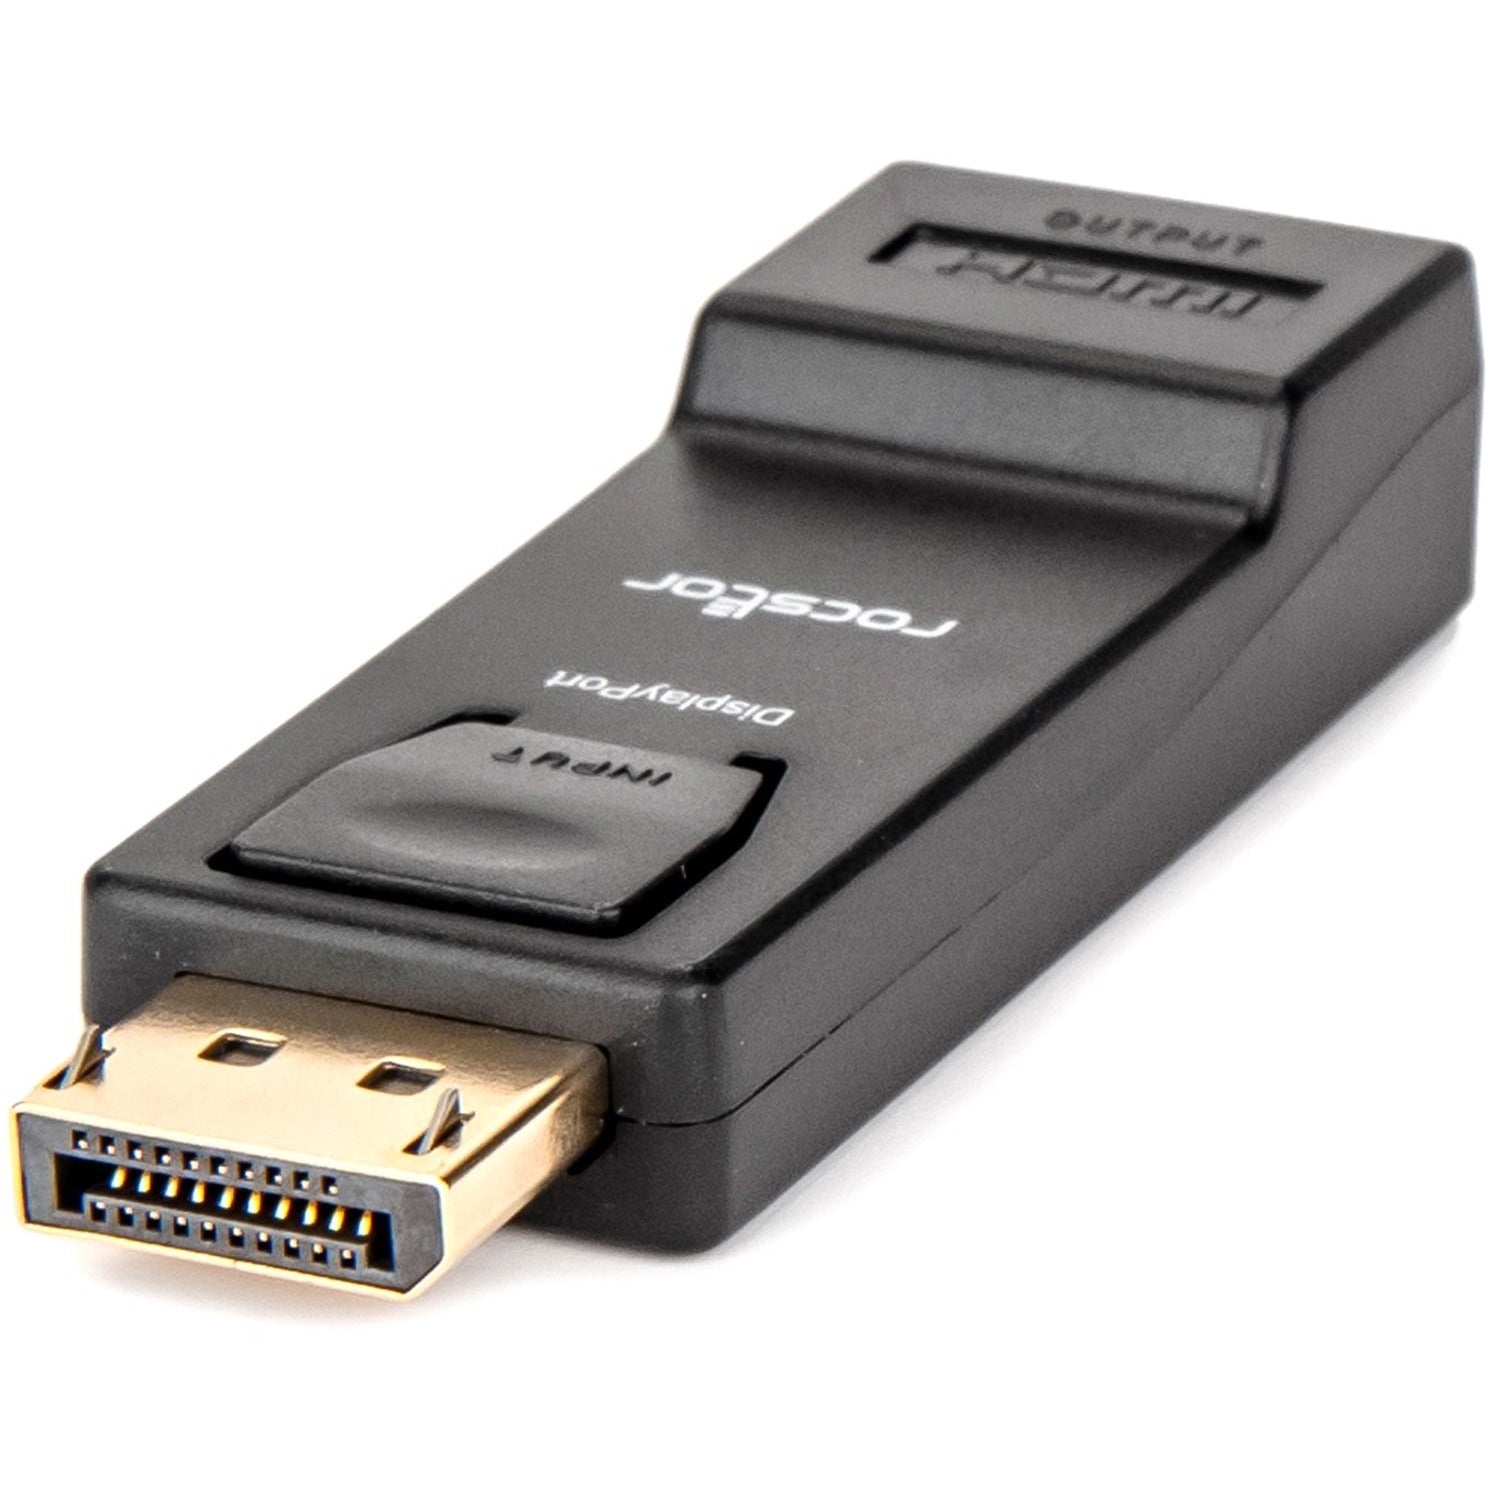 Rocstor Y10A170-B1 Premium DisplayPort to HDMI Adapter M/F, Gold Plated Connectors, Black